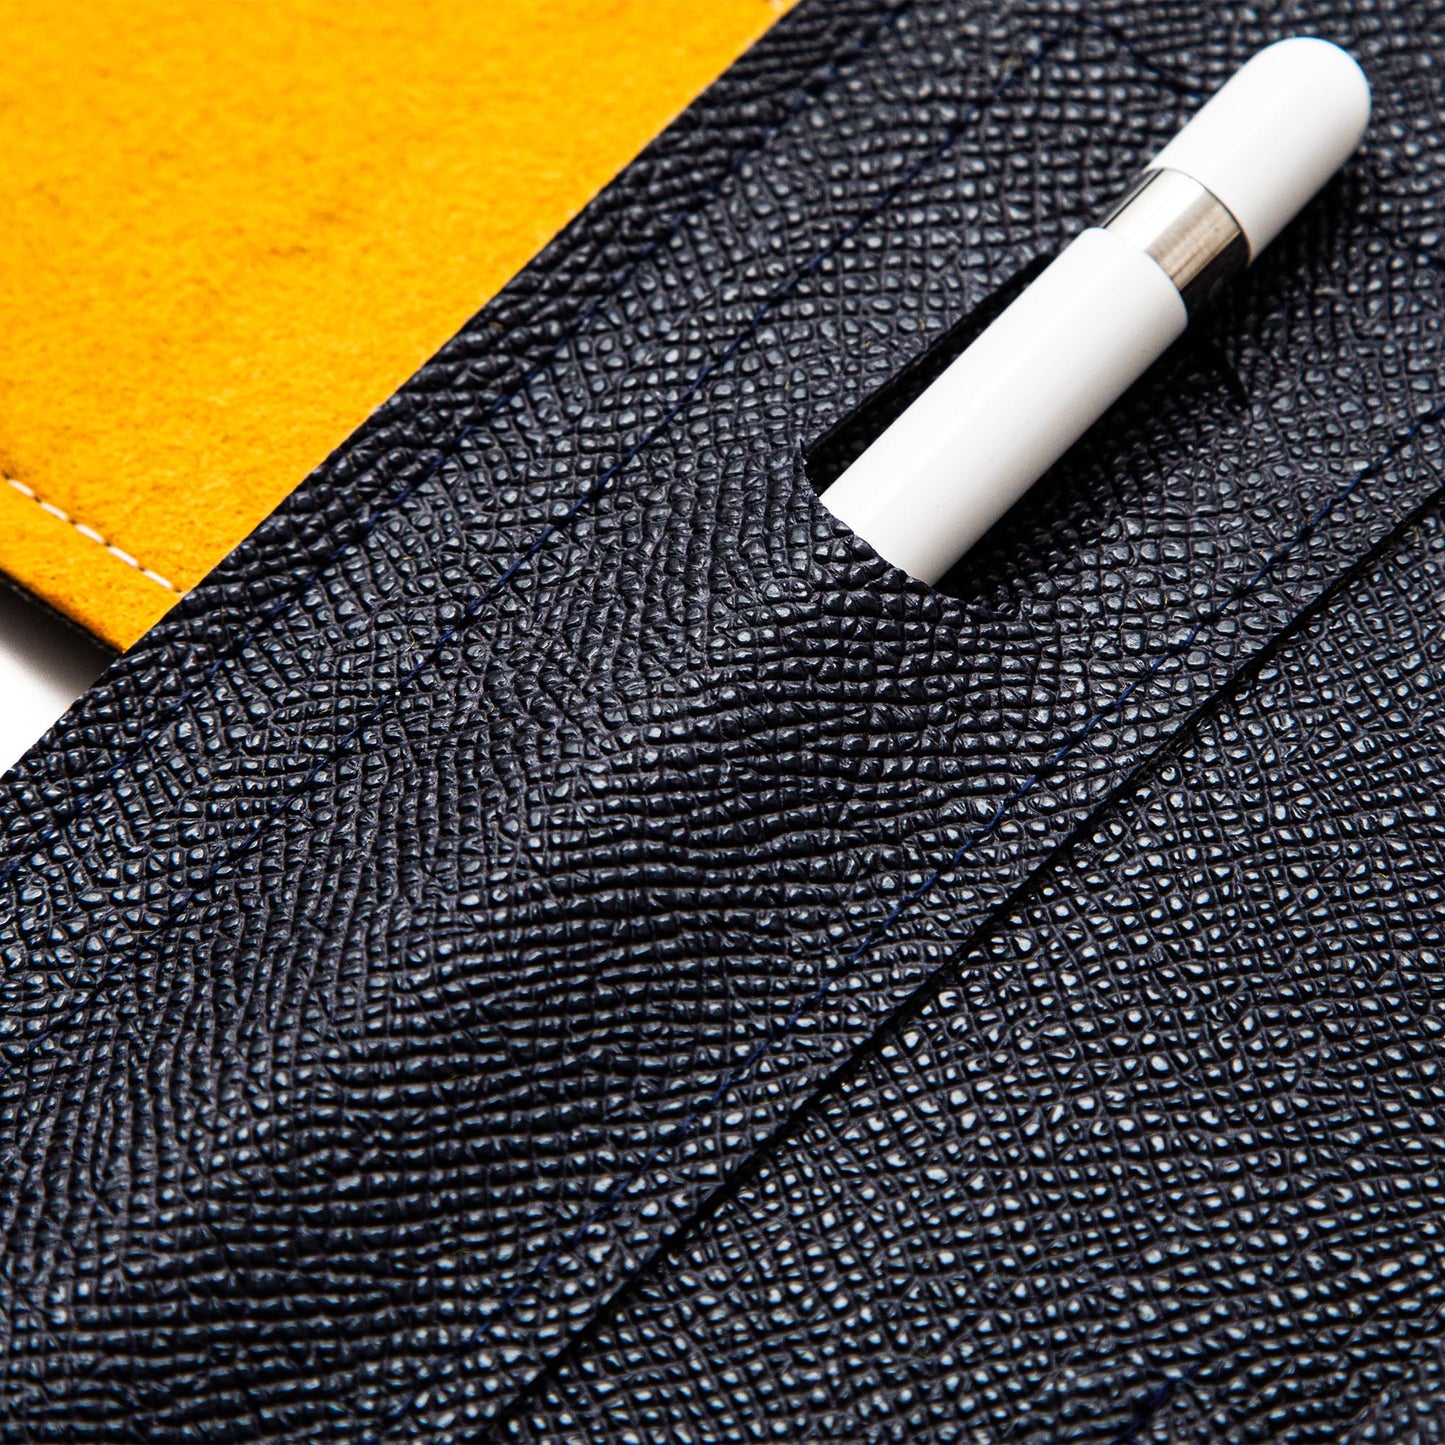 Handmade iPad Cover - Navy & Orange Faux Leather Folio for Apple iPad Air/Pro/Mini